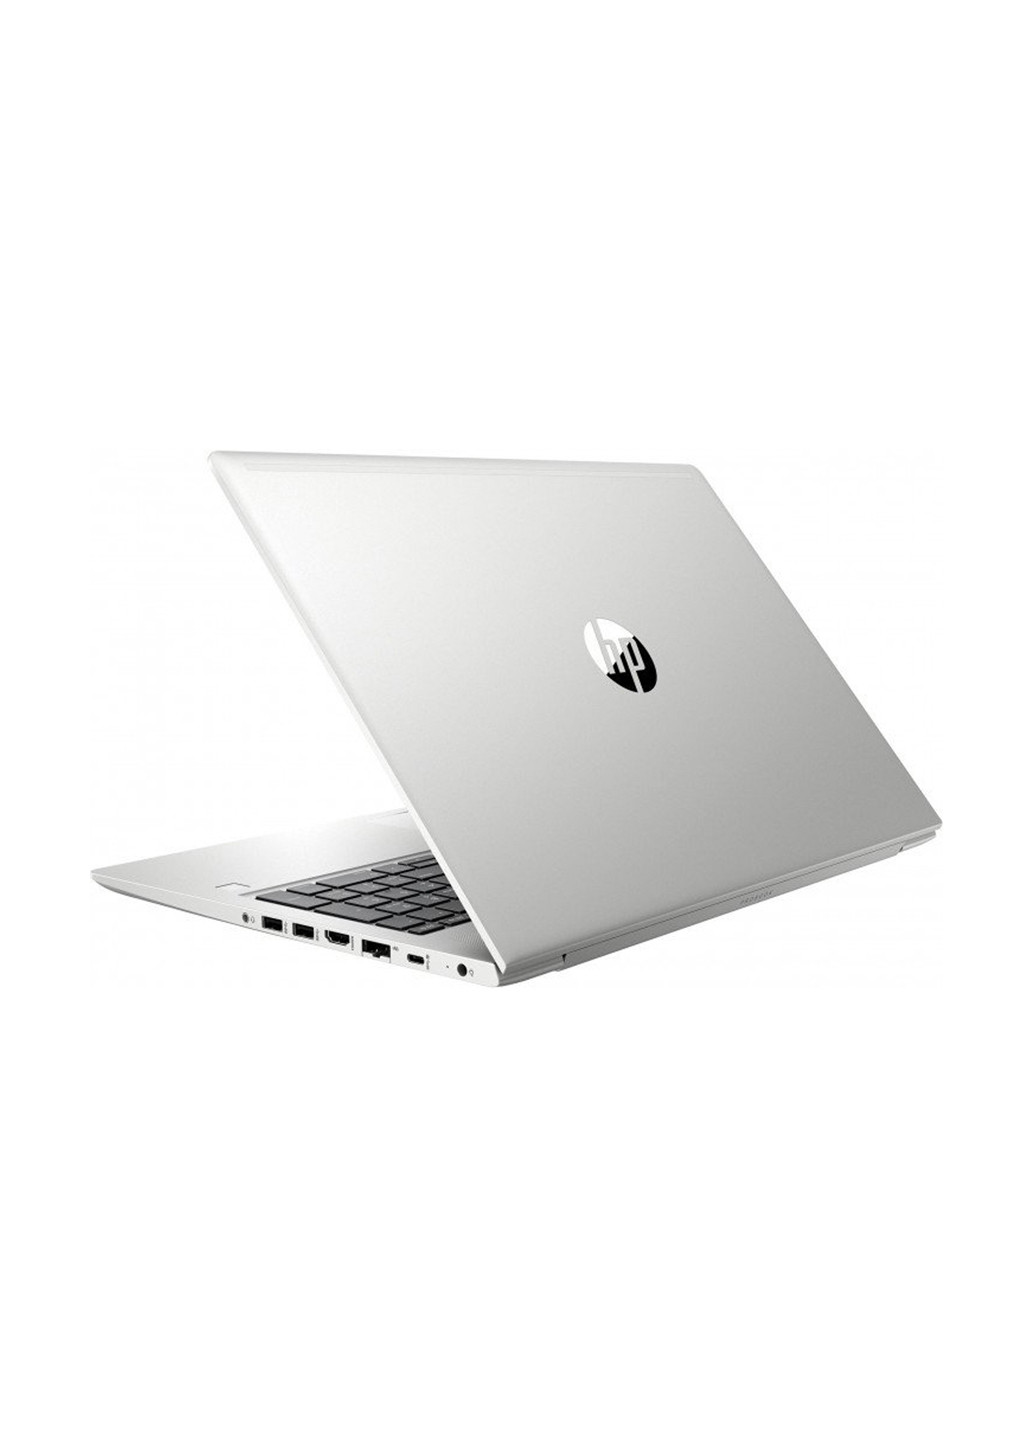 Ноутбук HP probook 450 g6 (4sz47av_v22) silver (173921859)